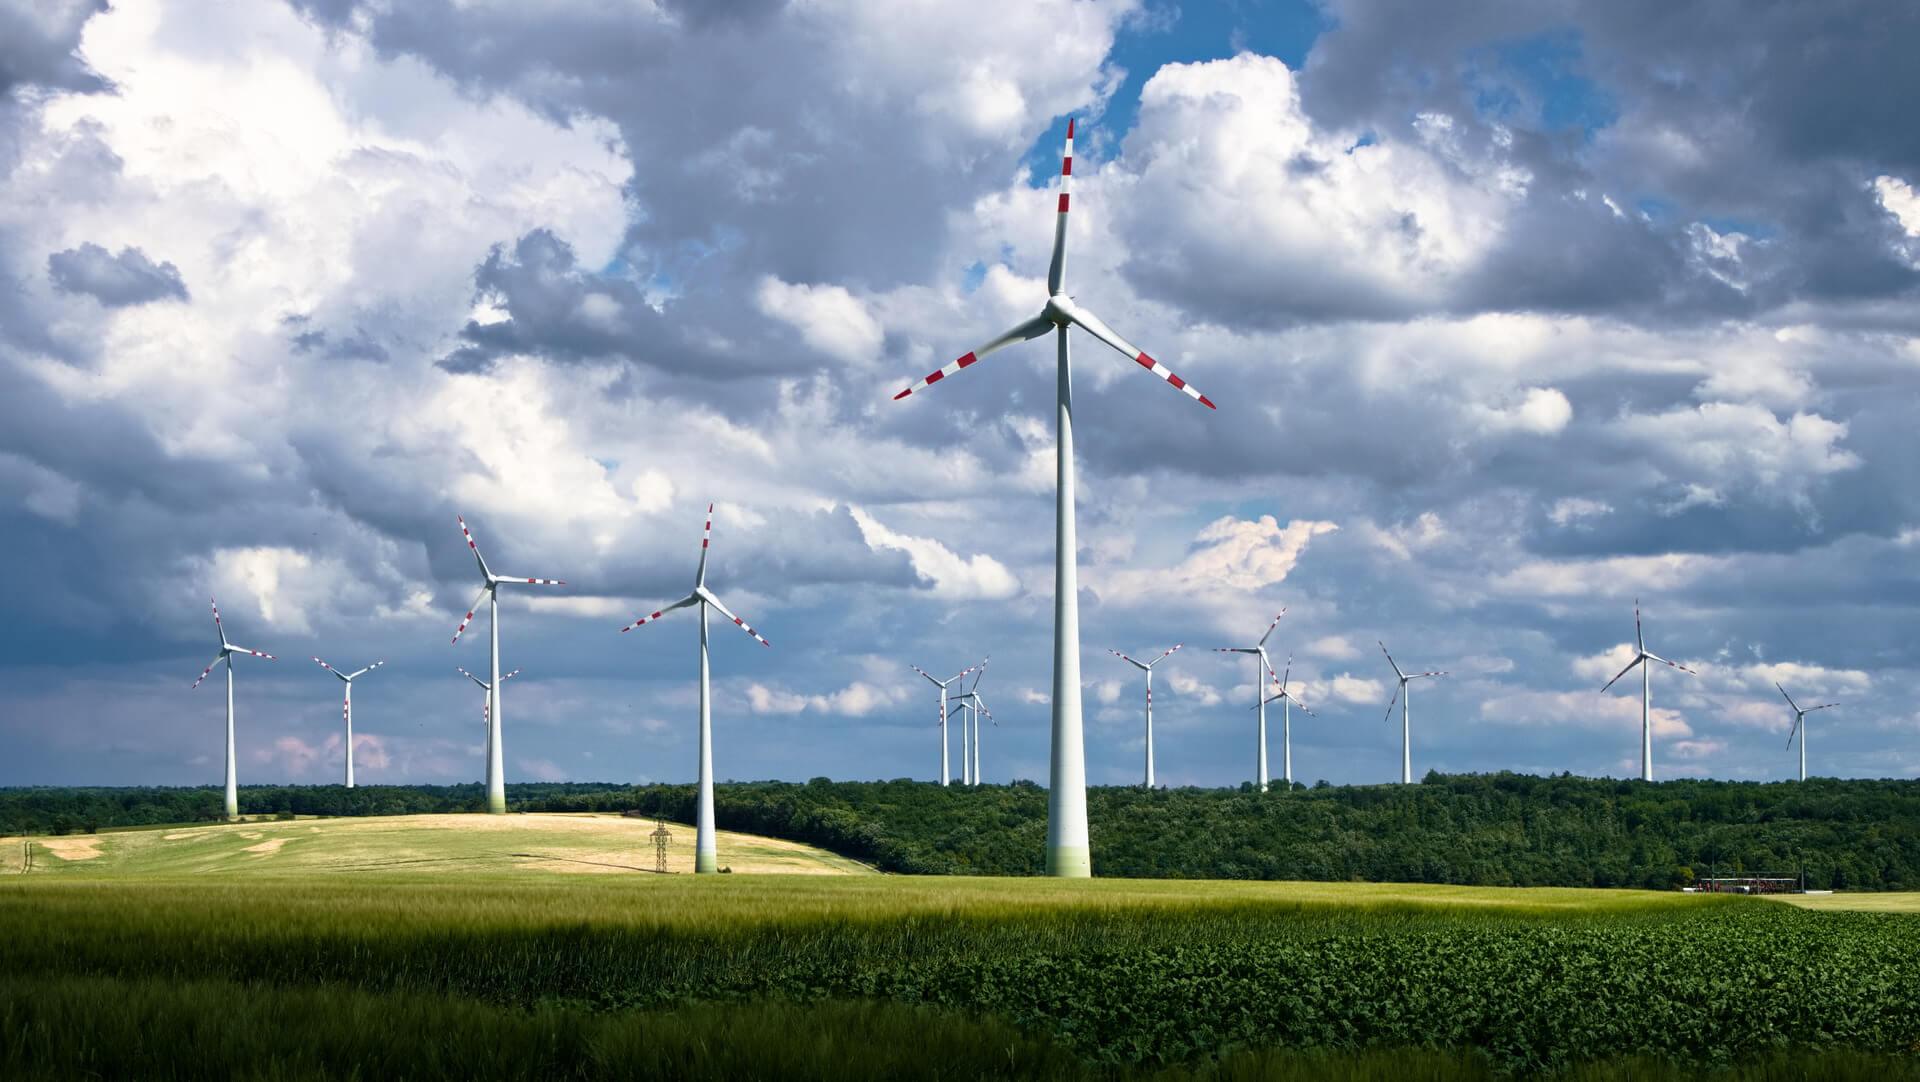 Green fields with wind-turbines